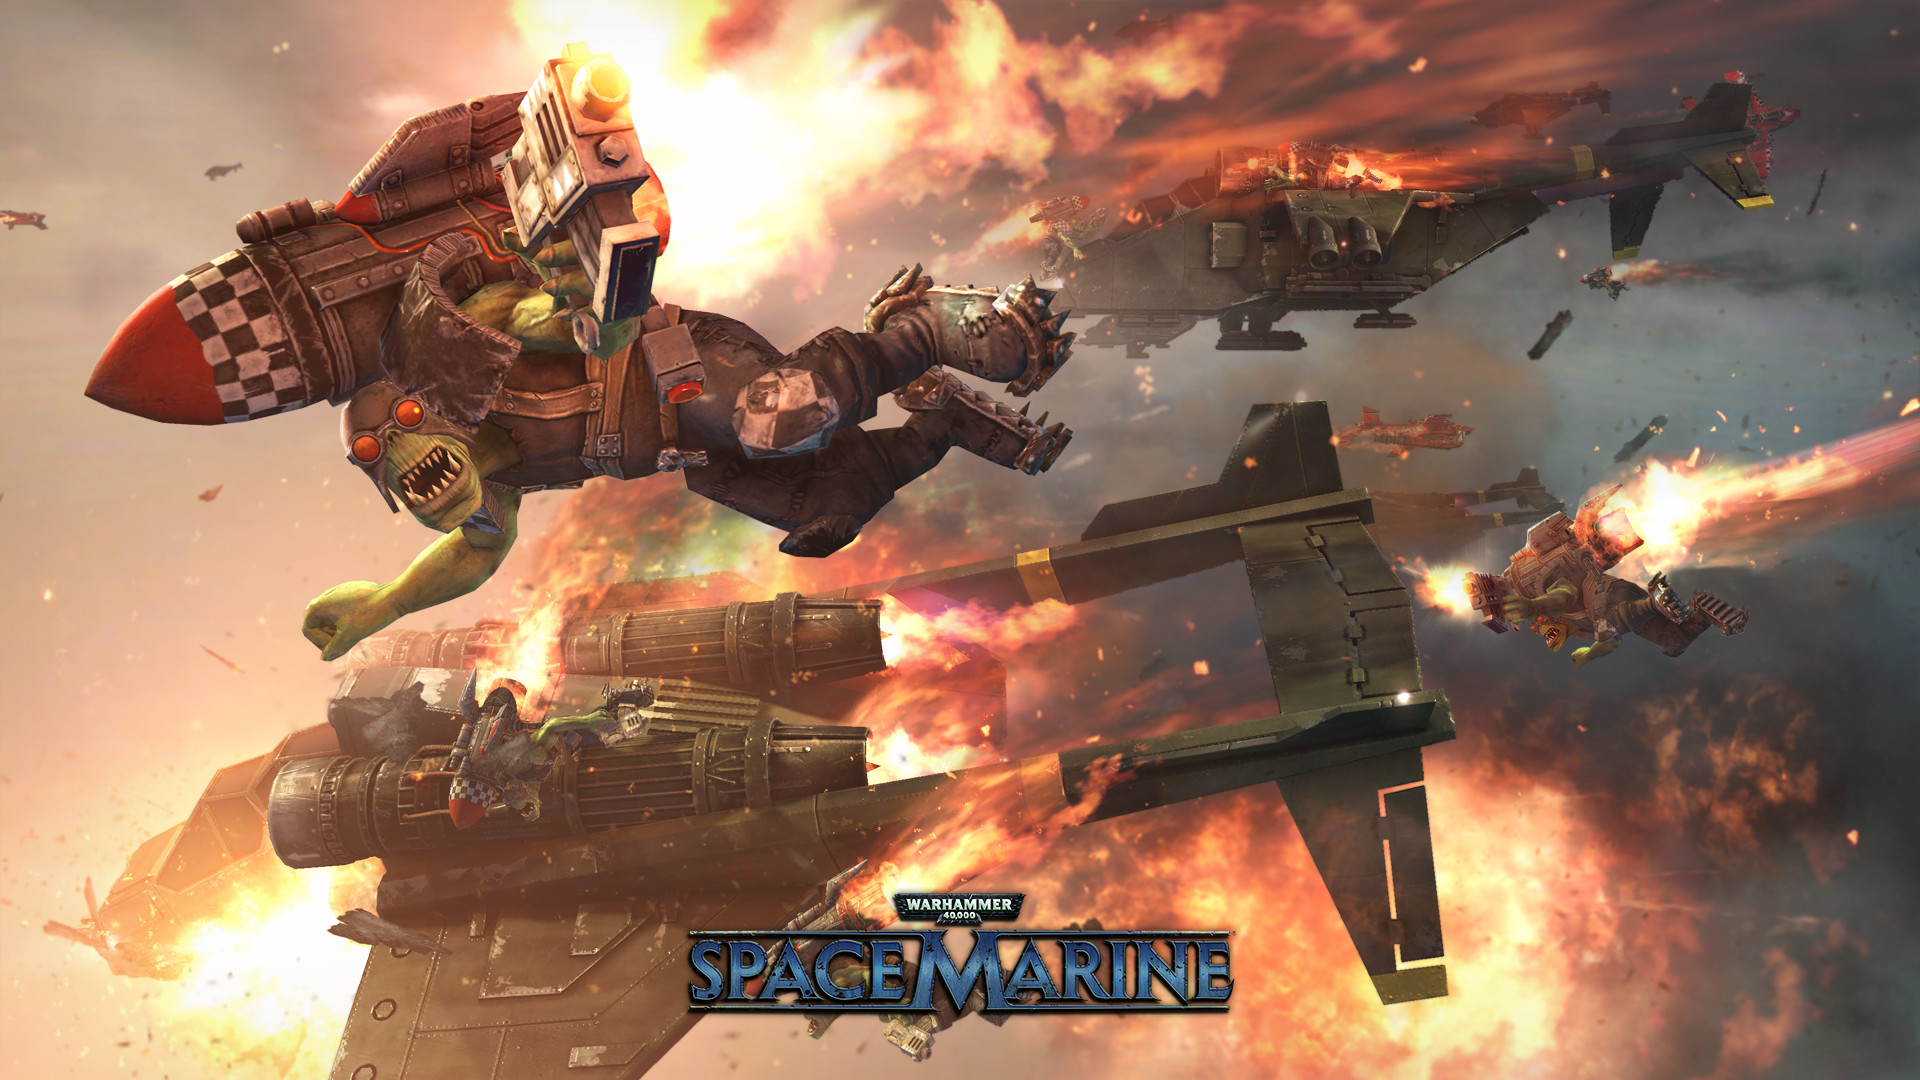 Warhammer 40,000: Space Marine - Anniversary Edition English Language Only Steam CD Key 26.11 usd